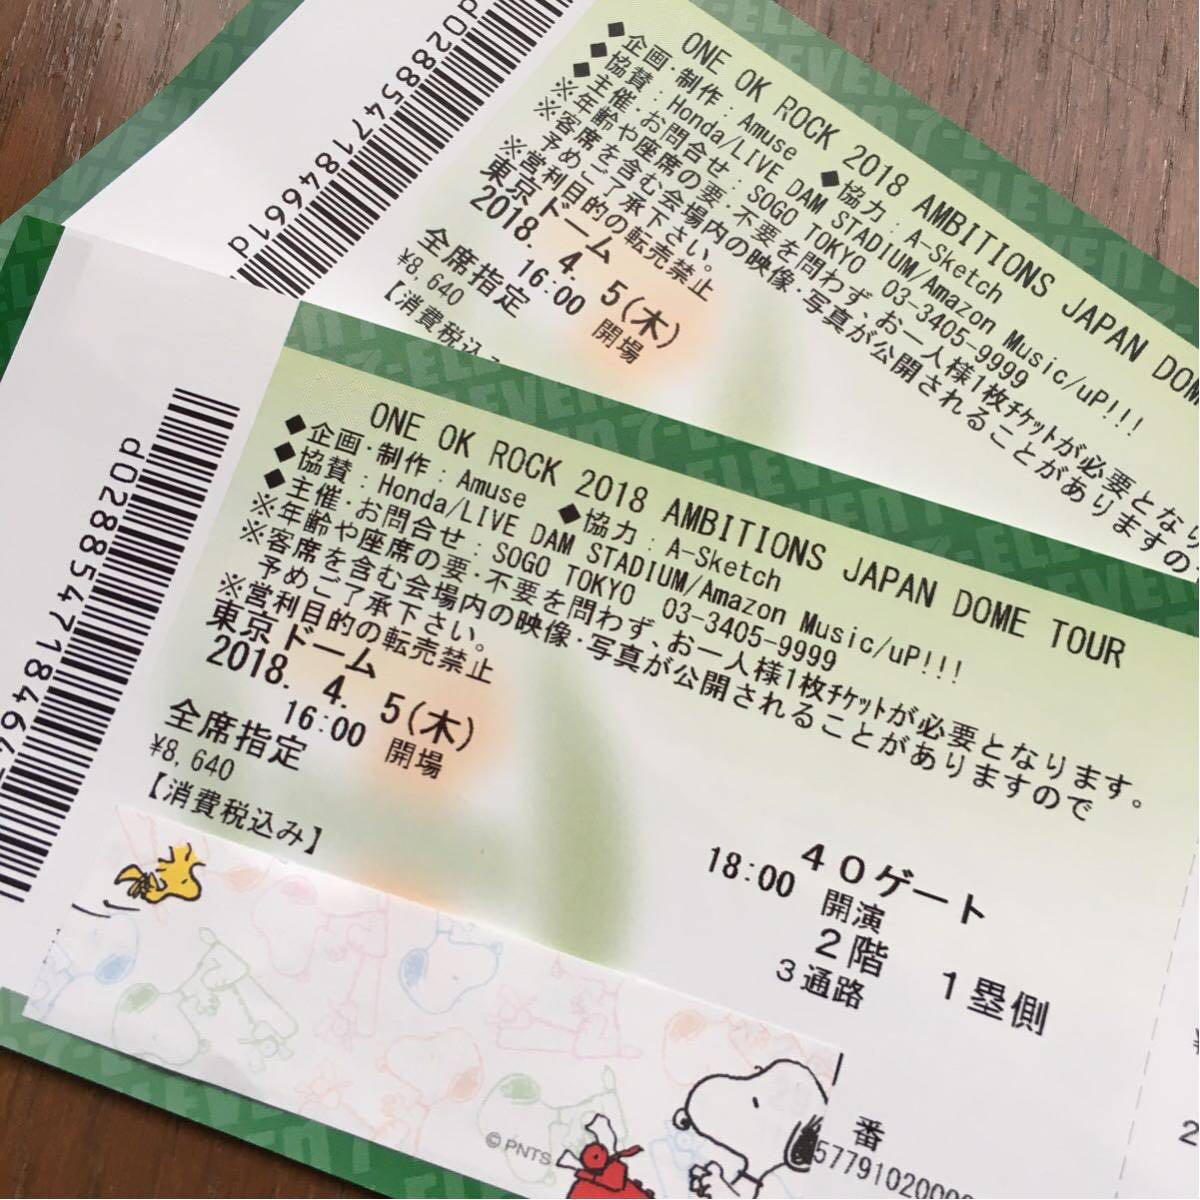 ☆ONE OK ROCK 2018 AMBITIONS JAPAN DOME TOUR☆4/5(木)東京ドーム2枚分◆送料無料◆